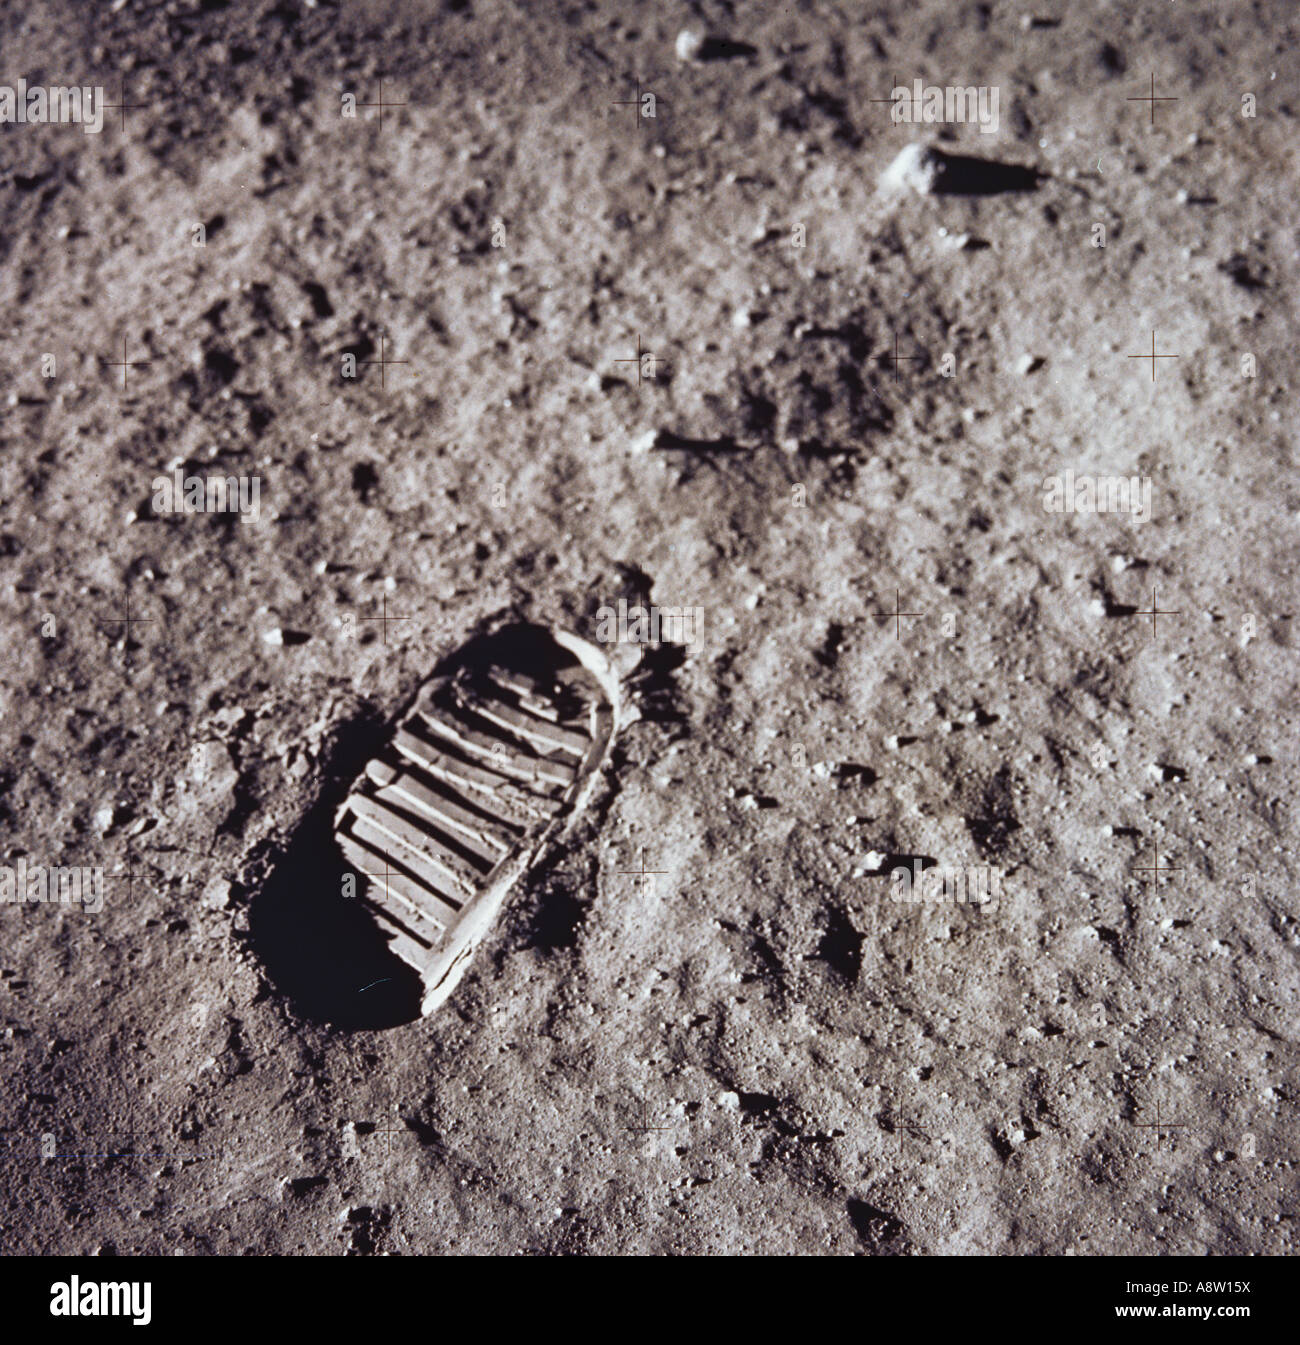 NASA Moon landing. Astronaut Neil Armstrong's first step footprint in lunar soil. Stock Photo